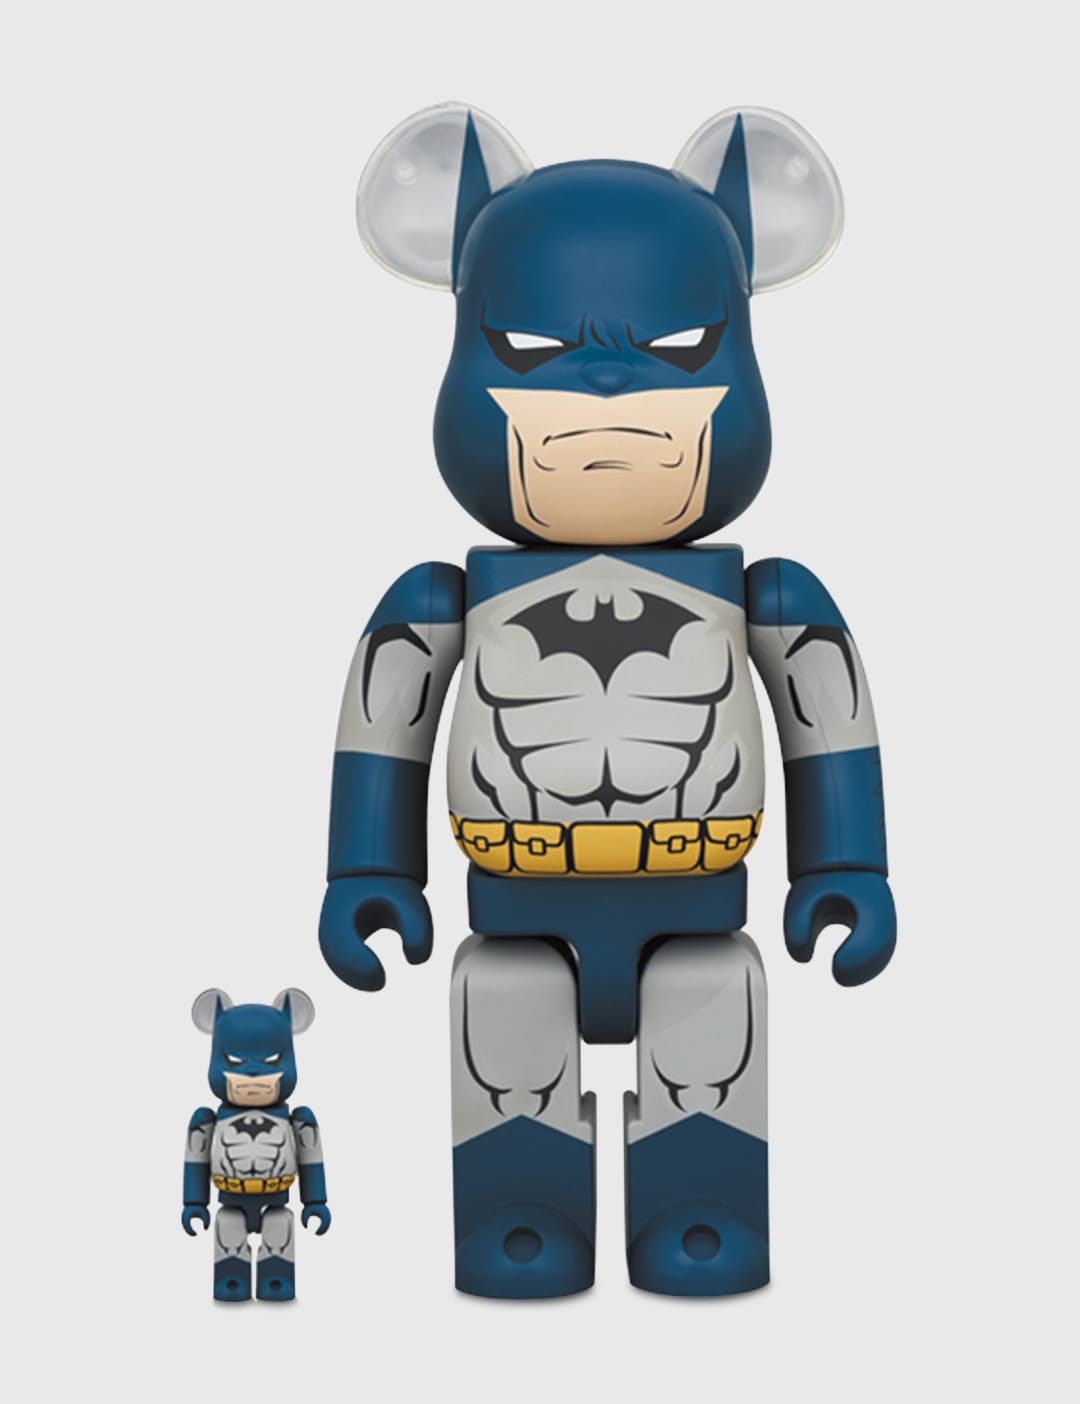 Medicom Toy - BE＠RBRICK Batman (Batman HUSH Version) 100% & 400